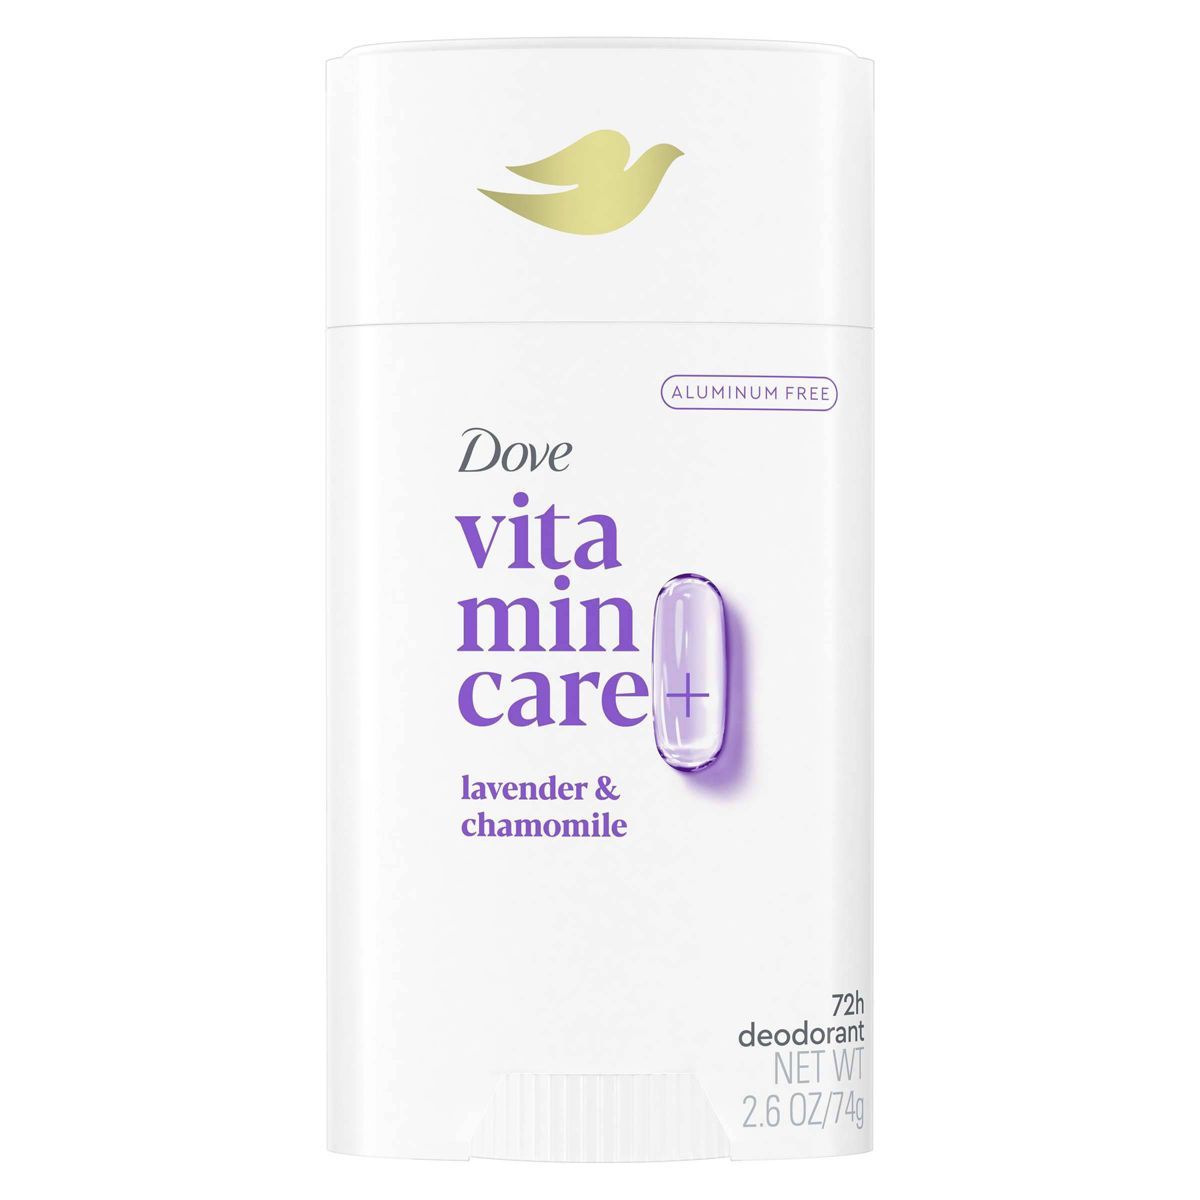 Dove Beauty VitaminCare+ Aluminum Free Lavender & Chamomile Deodorant Stick for Women - 2.6oz | Target